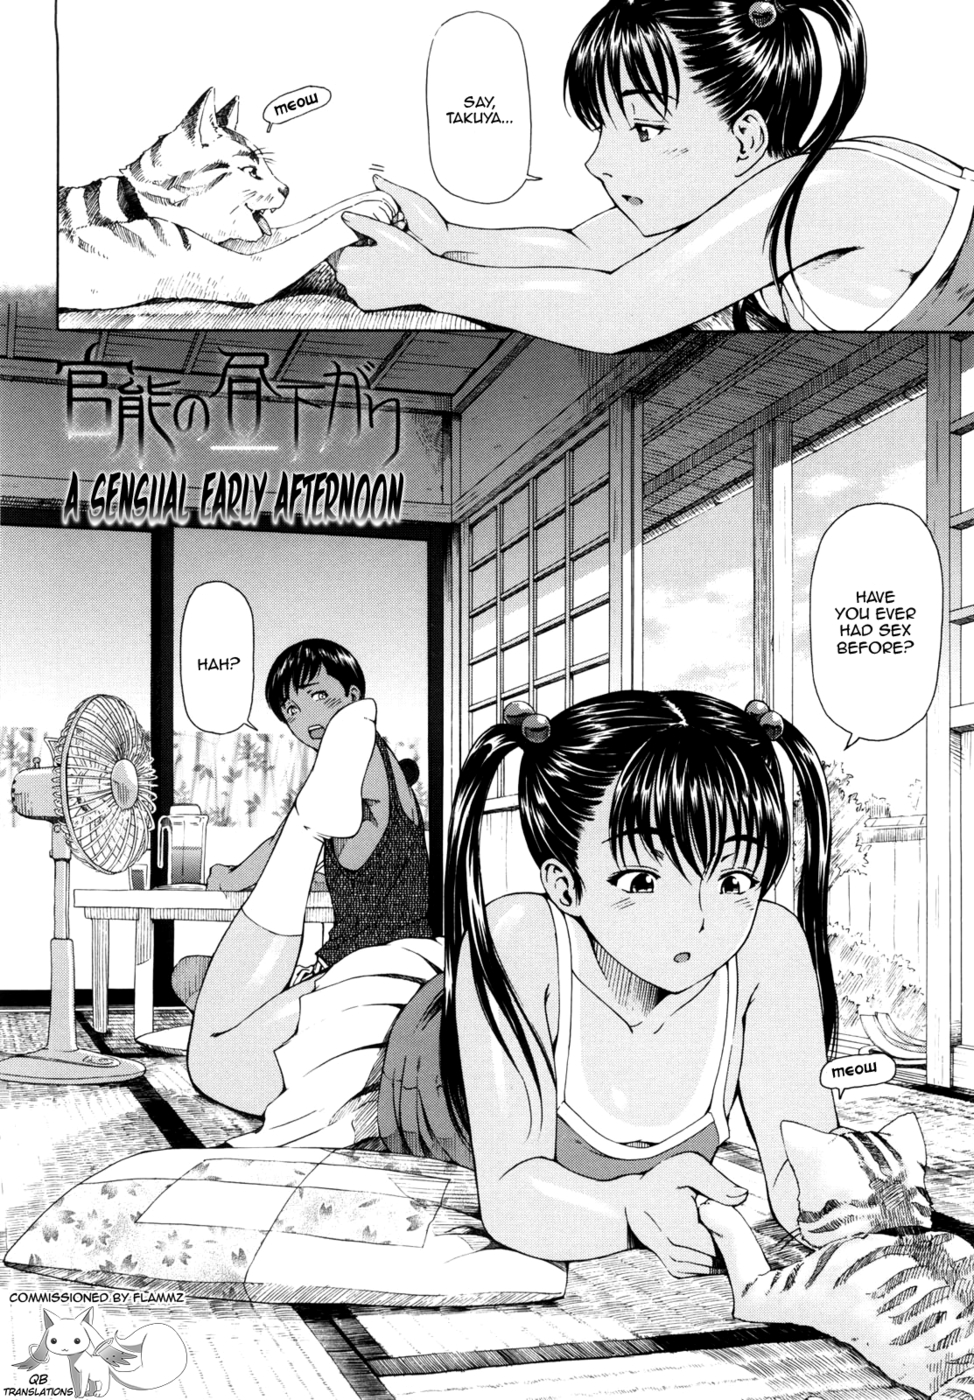 Hentai Manga Comic-A Sensual Early Afternoon-Read-2